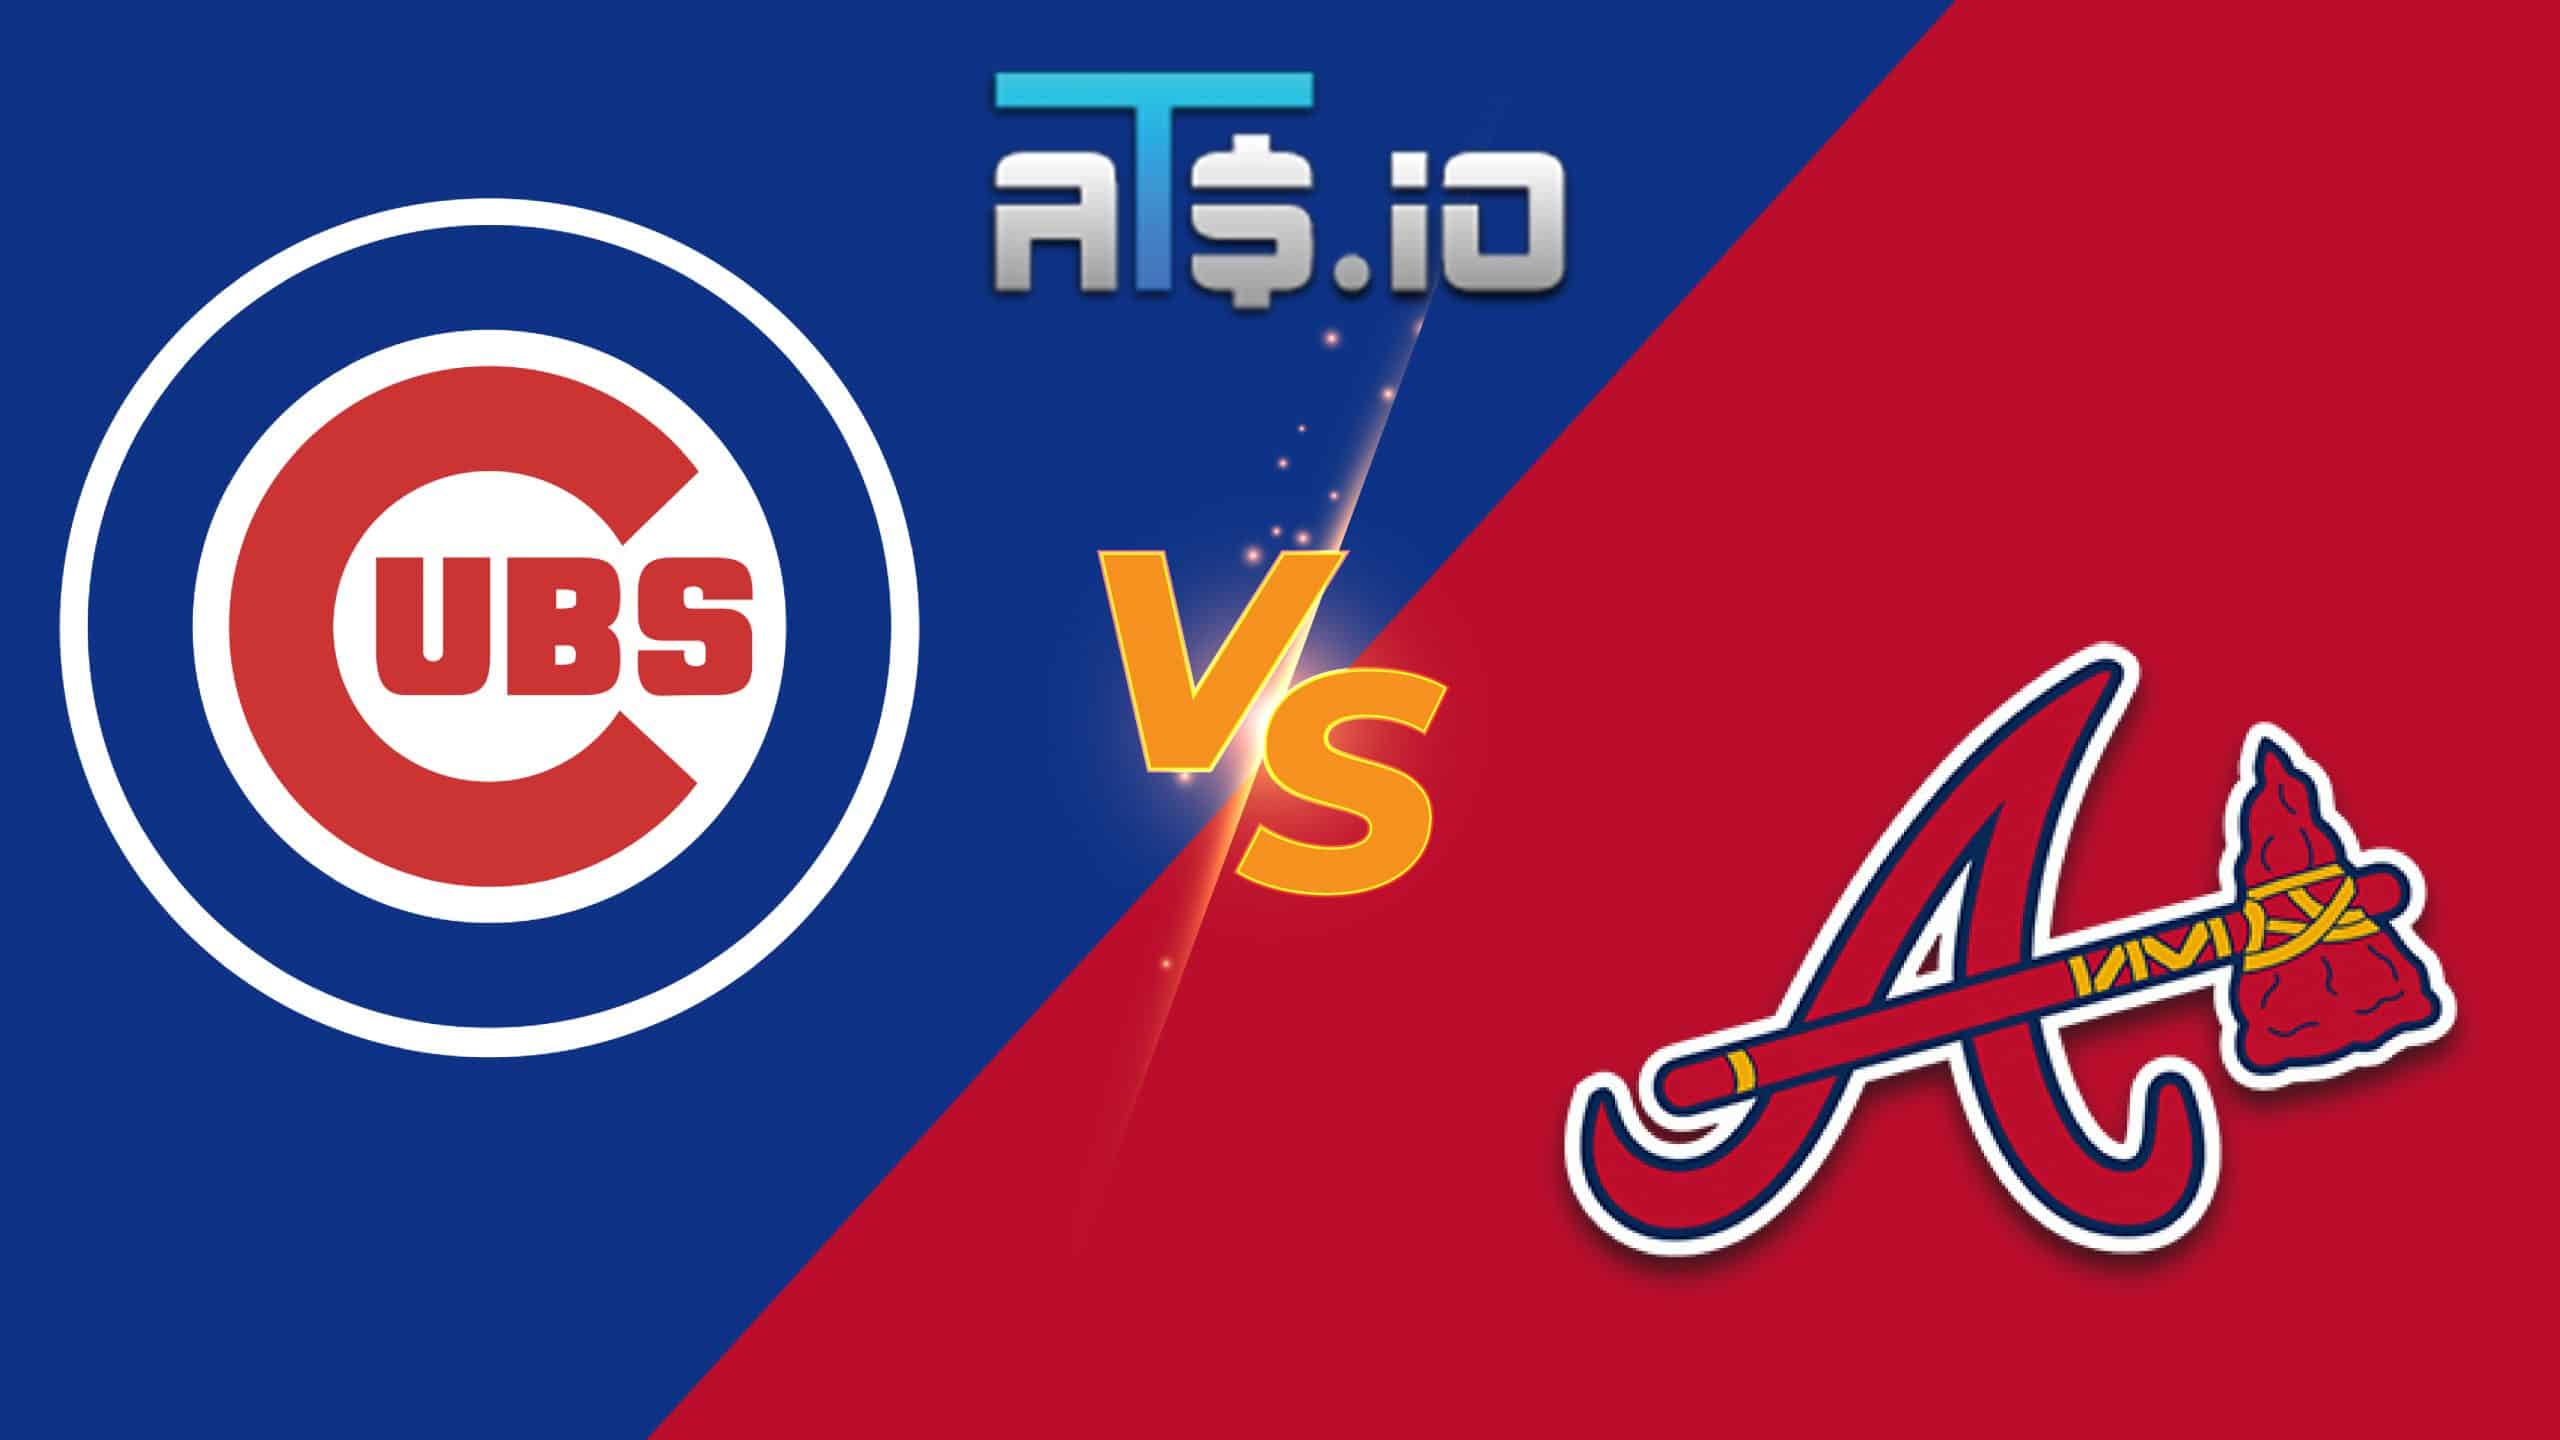 Chicago Cubs vs Atlanta Braves Free MLB Pick & Prediction 04/28/22